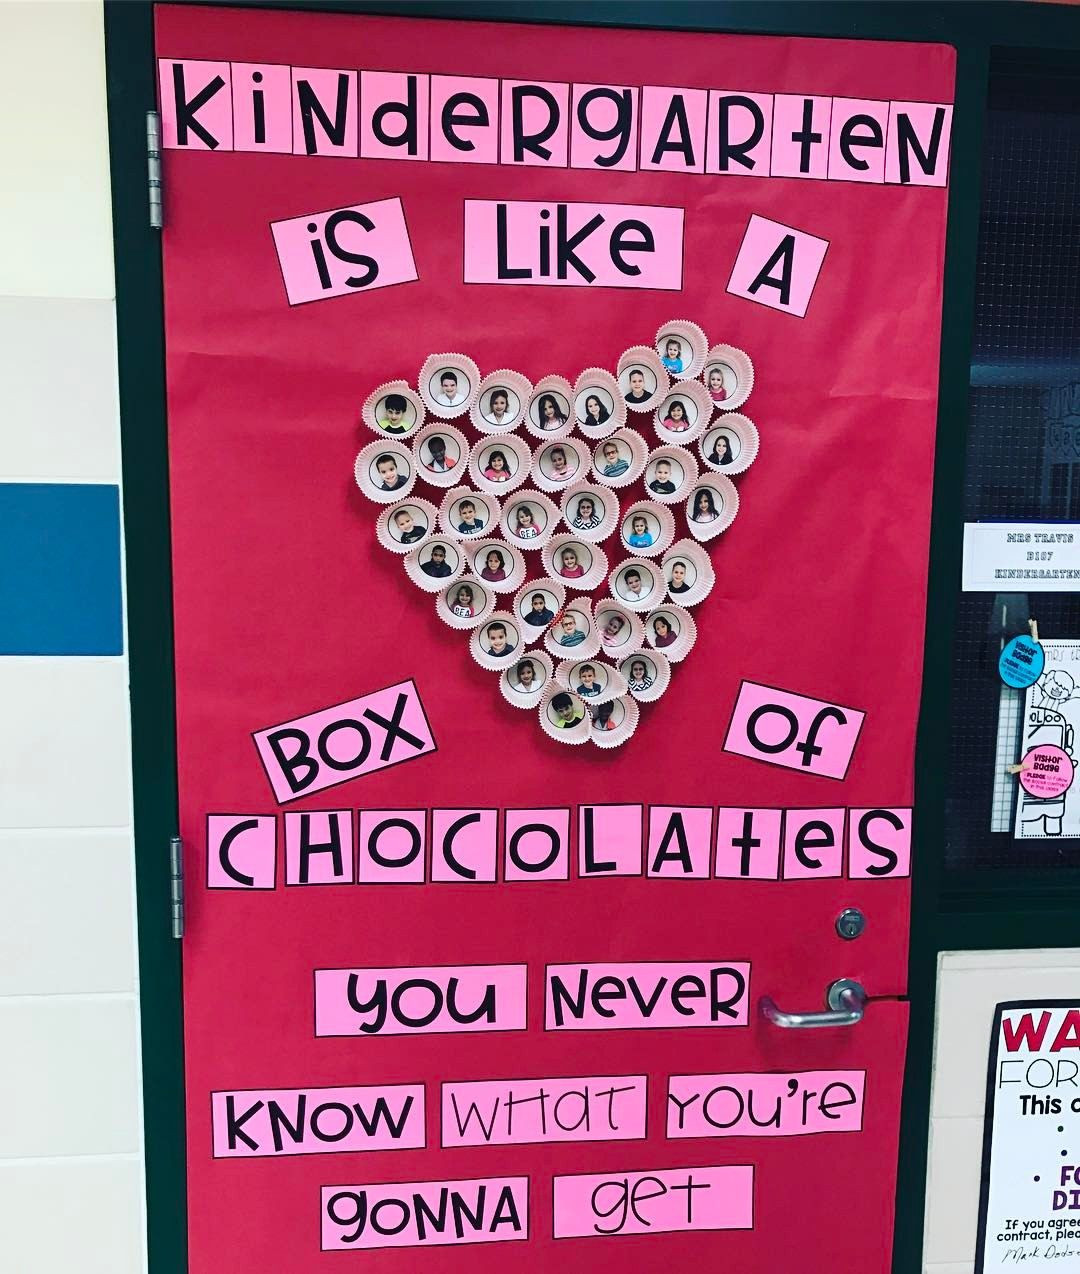 Valentine Gift Ideas For Preschool Class
 "Kindergarten is like a box of chocolates " door